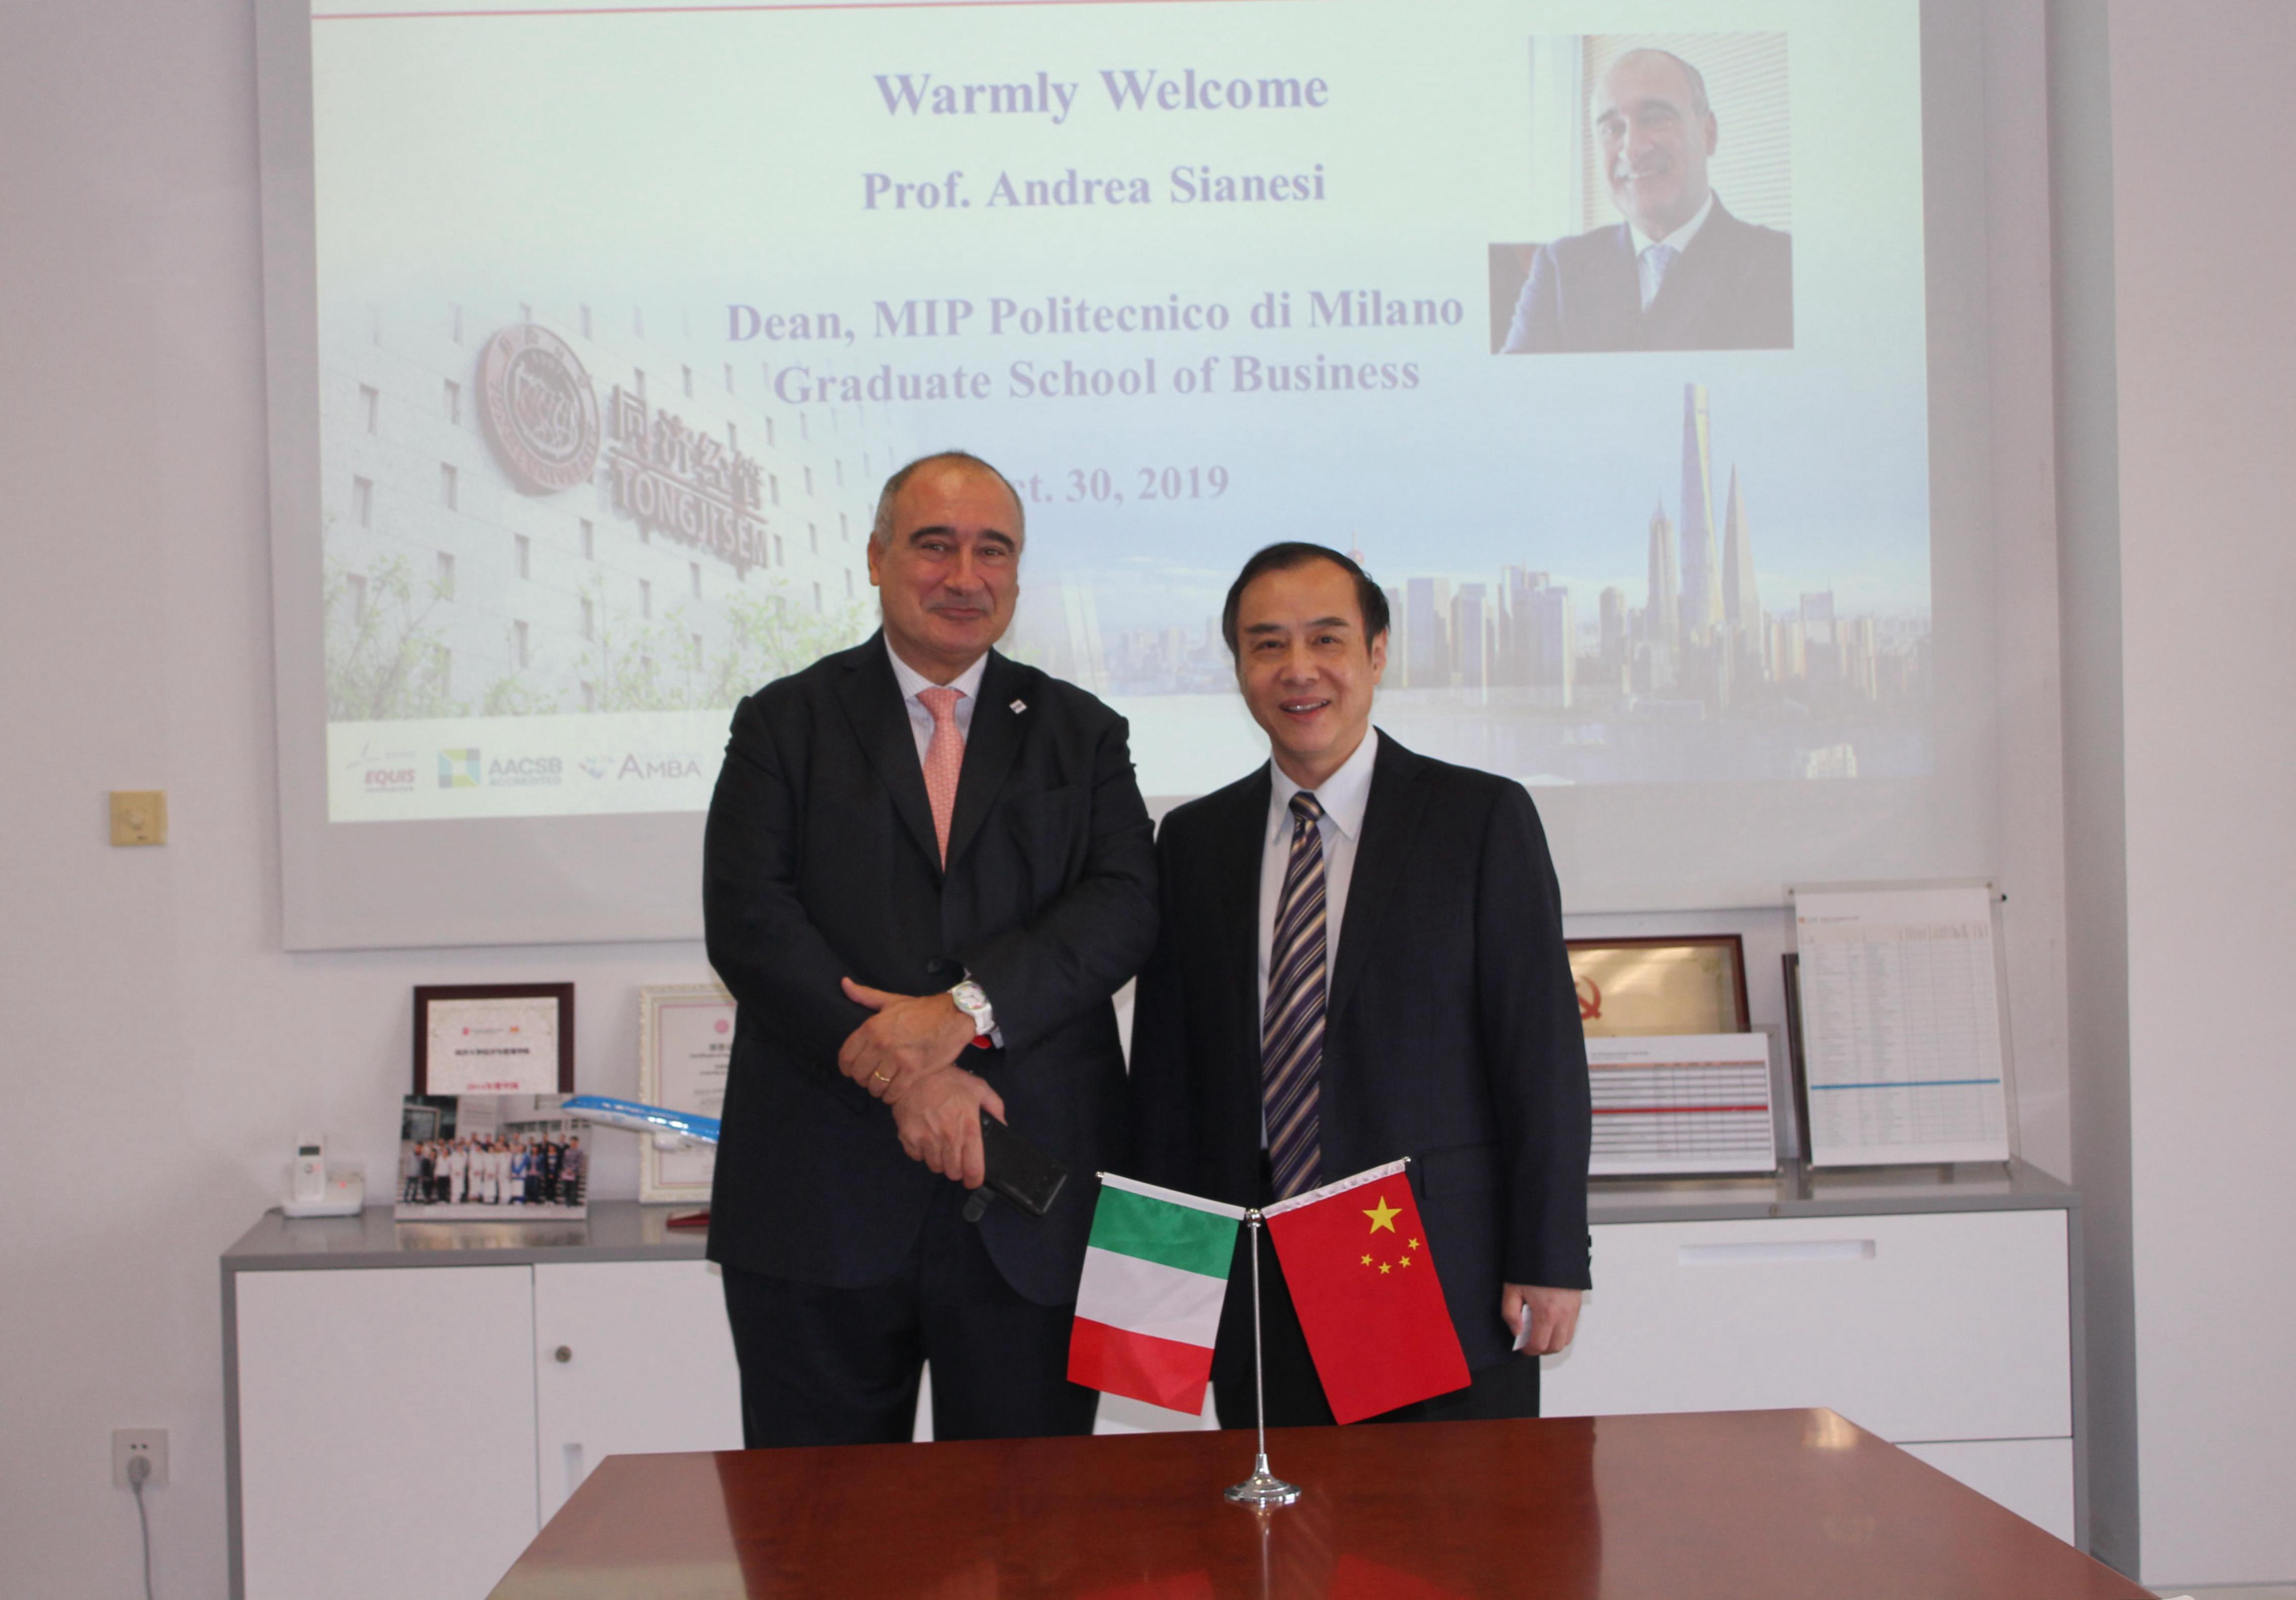 Dean of MIP Politecnico di Milano Graduate School of Business Visits SEM